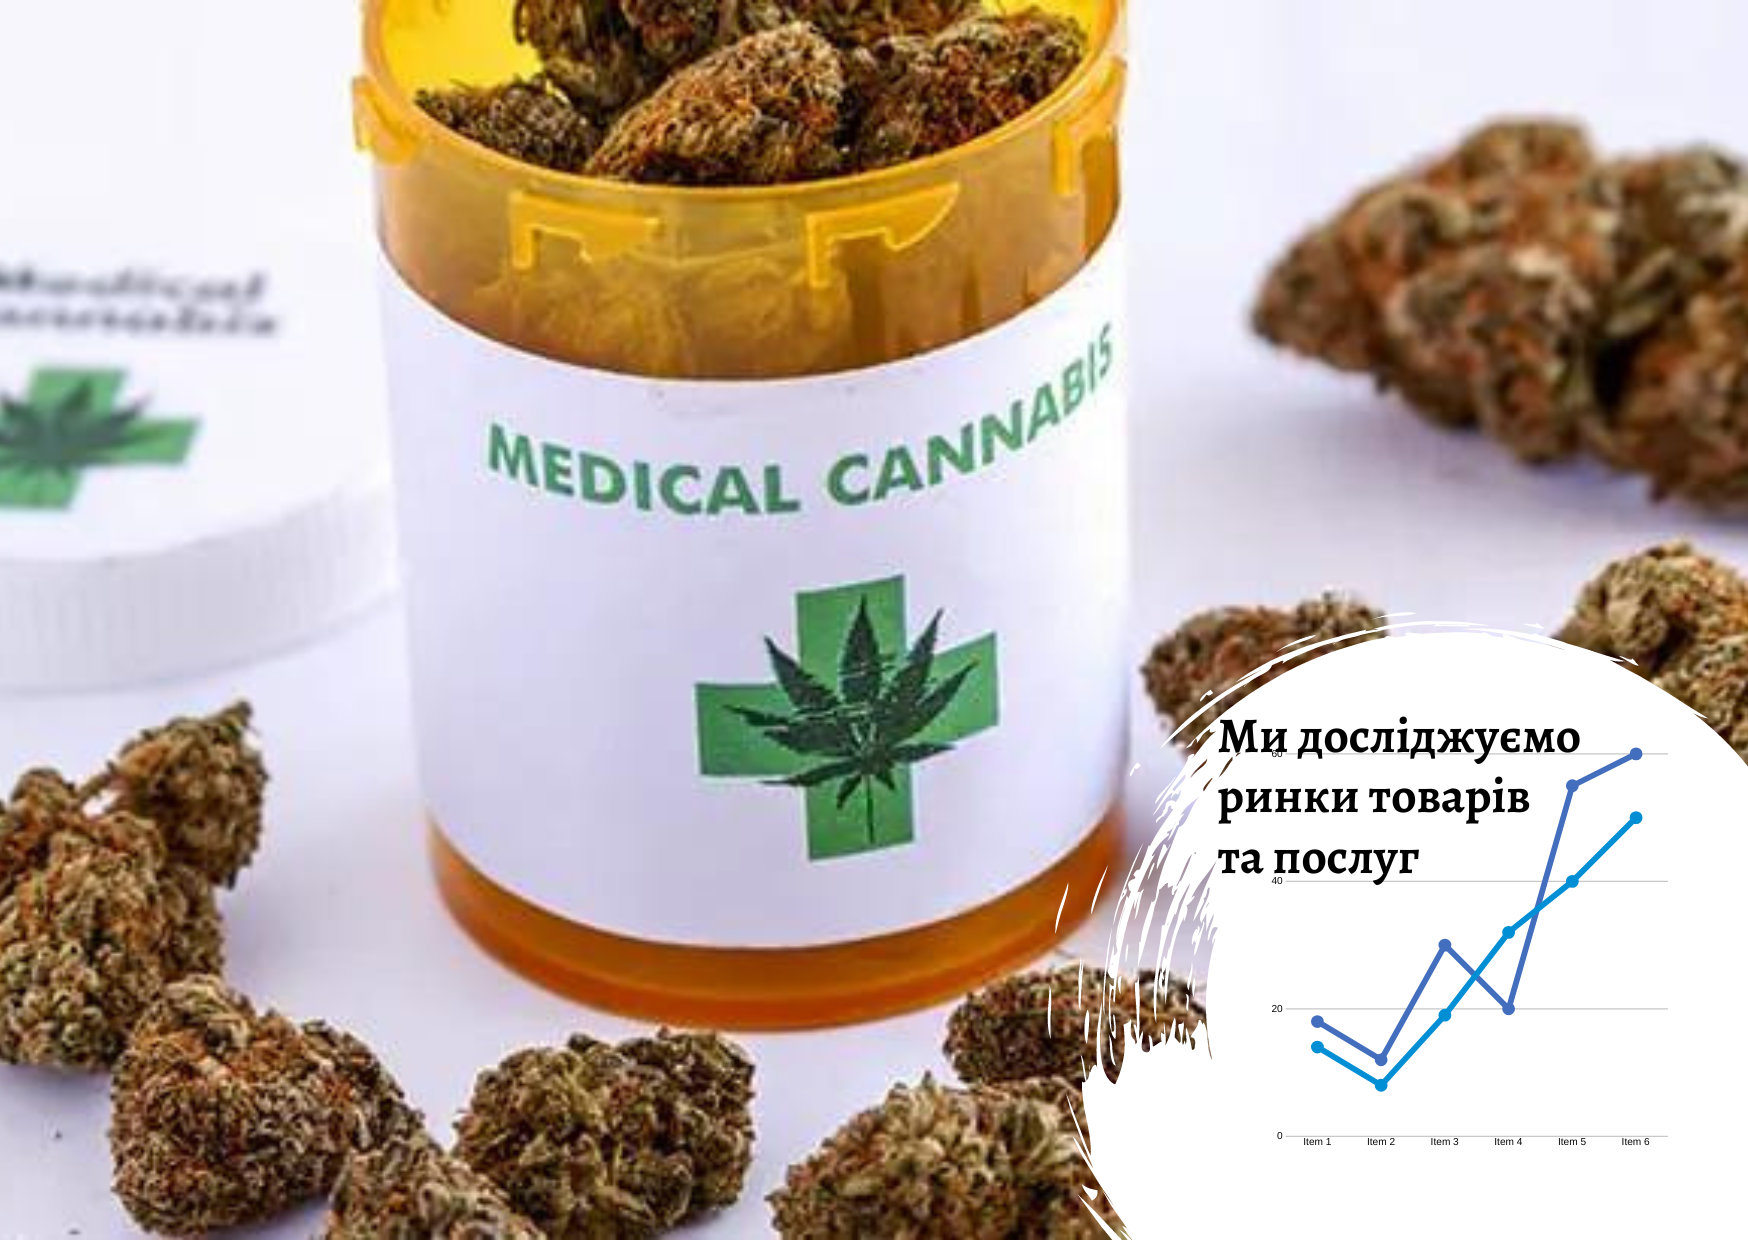 Ukrainian medical cannabis market: research report